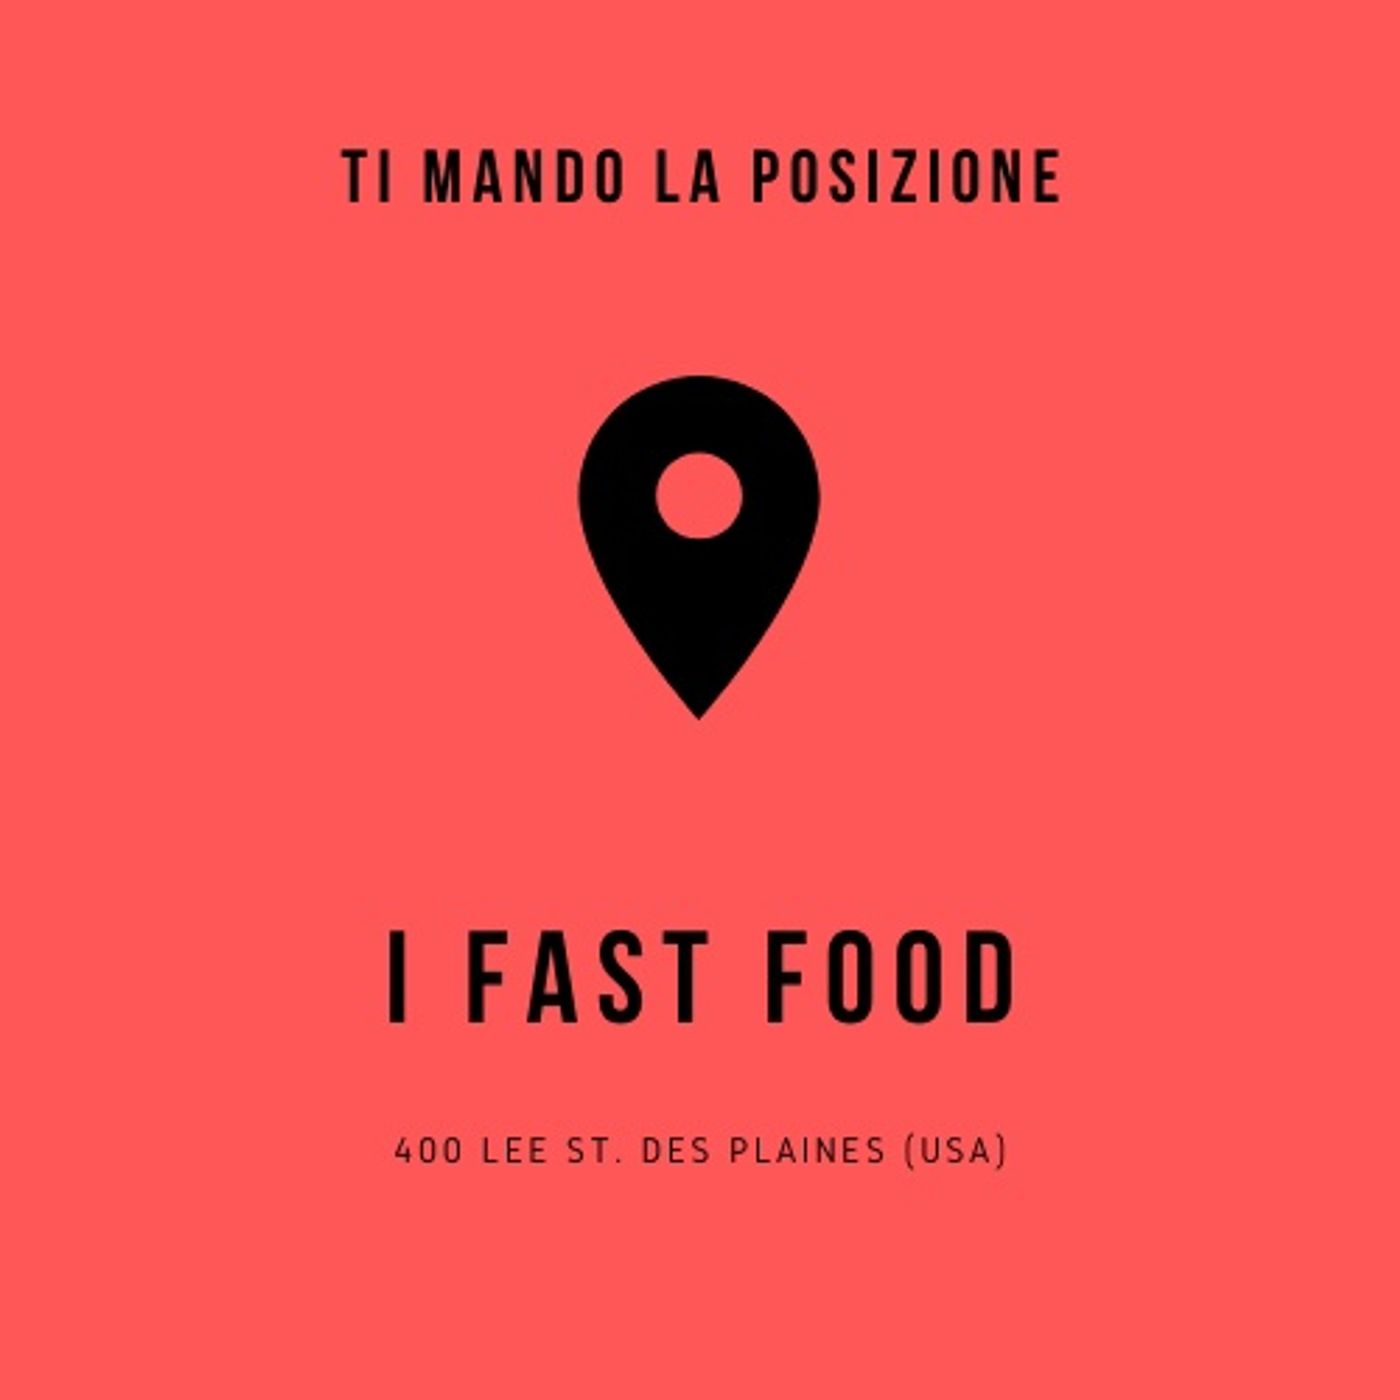 I fast food - 400 Lee St, Des Plaines (USA)